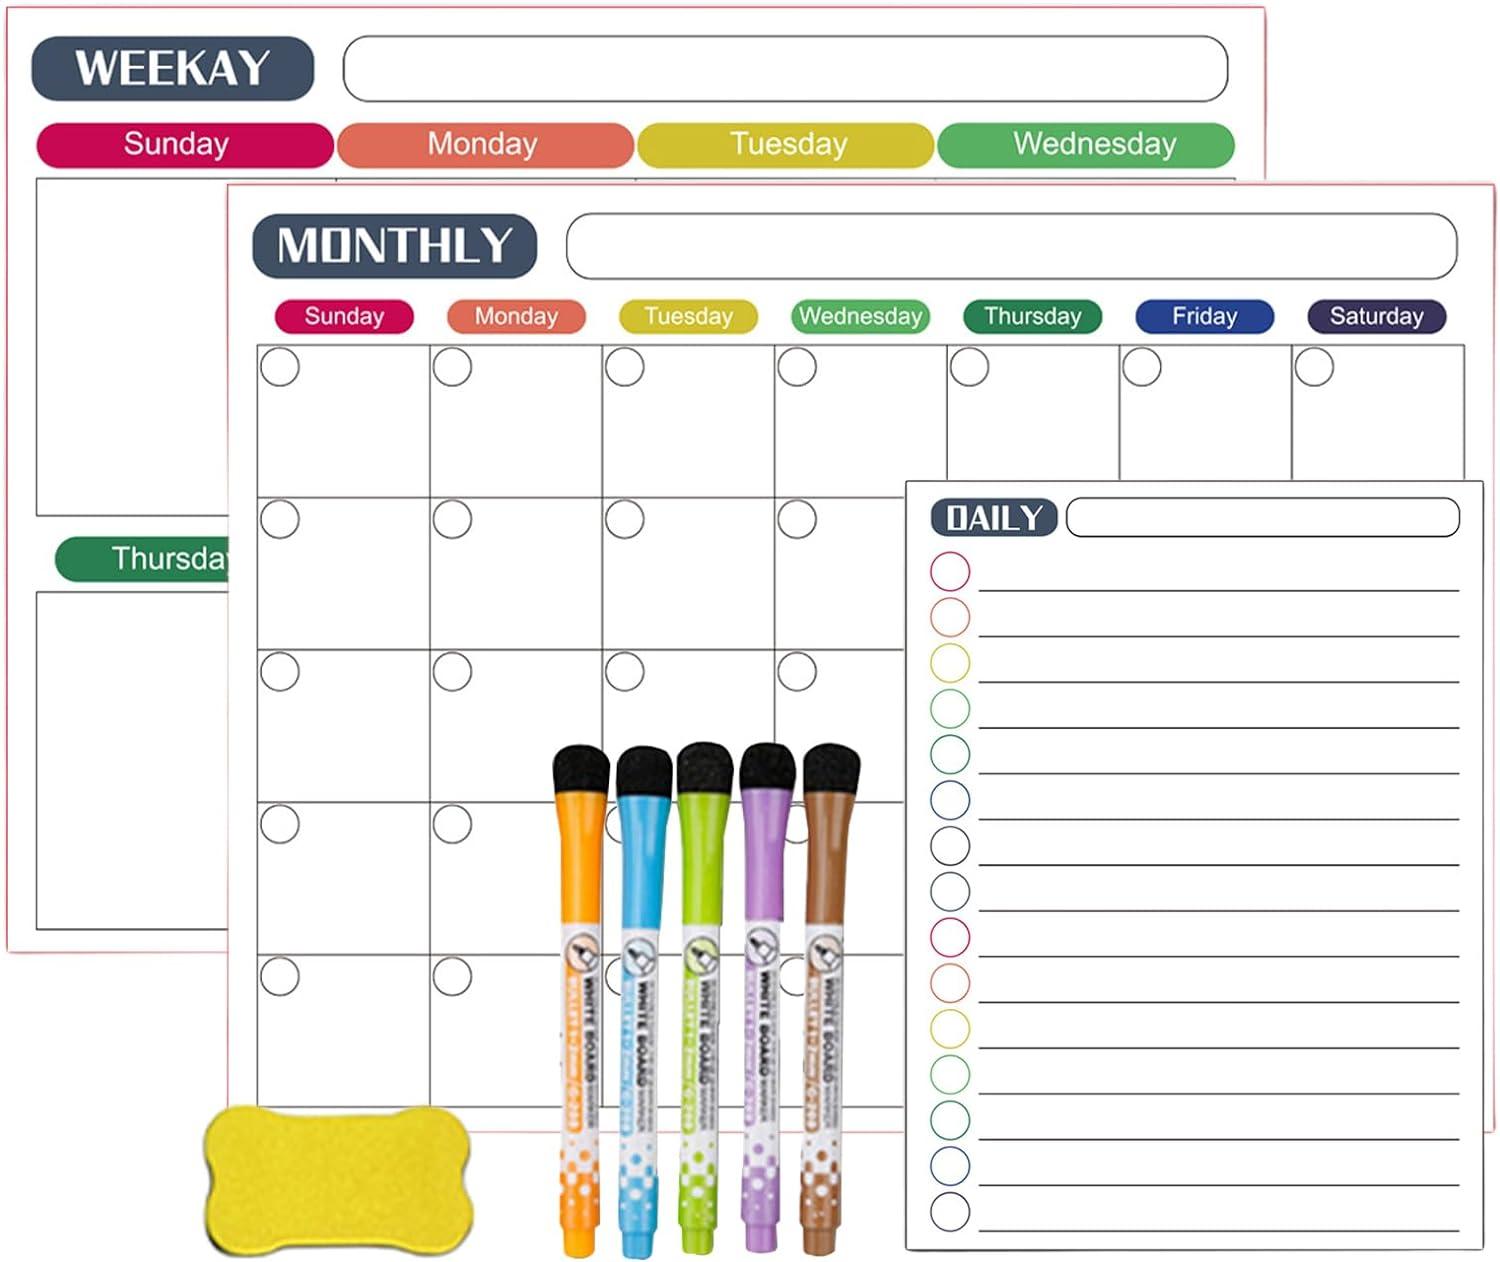 hmltd weekly magnetic calendar for fridge - planner board dry erase board  hmltd b0cpx9lc7v